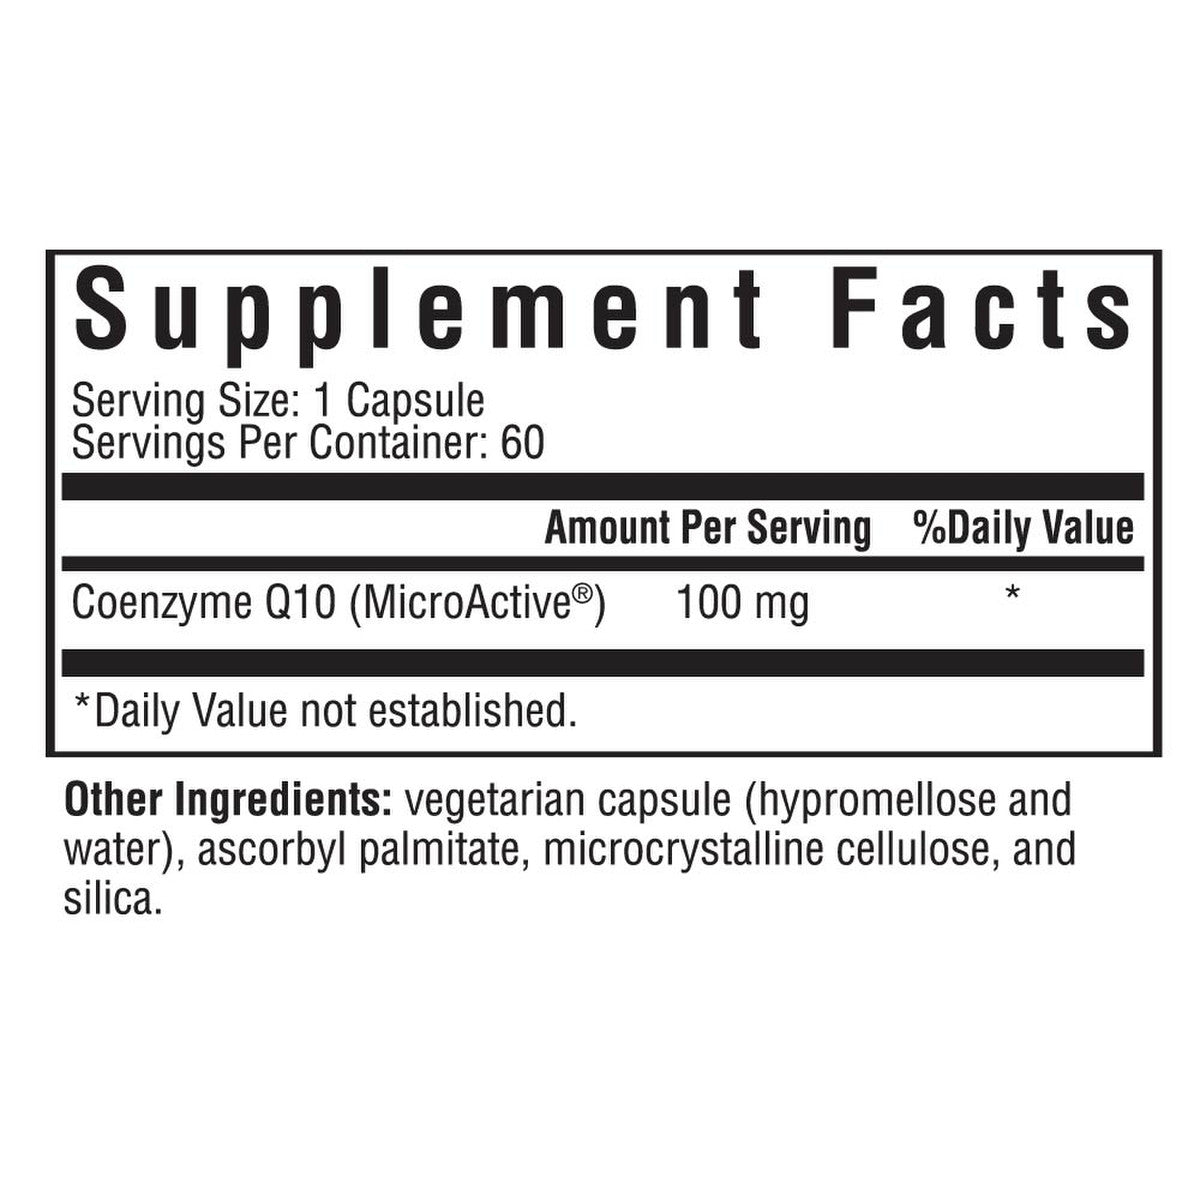 Optimal CoQ10 100mg 60 capsules Seeking Health - Premium Vitamins & Supplements from Seeking Health - Just $49.95! Shop now at Nutrigeek